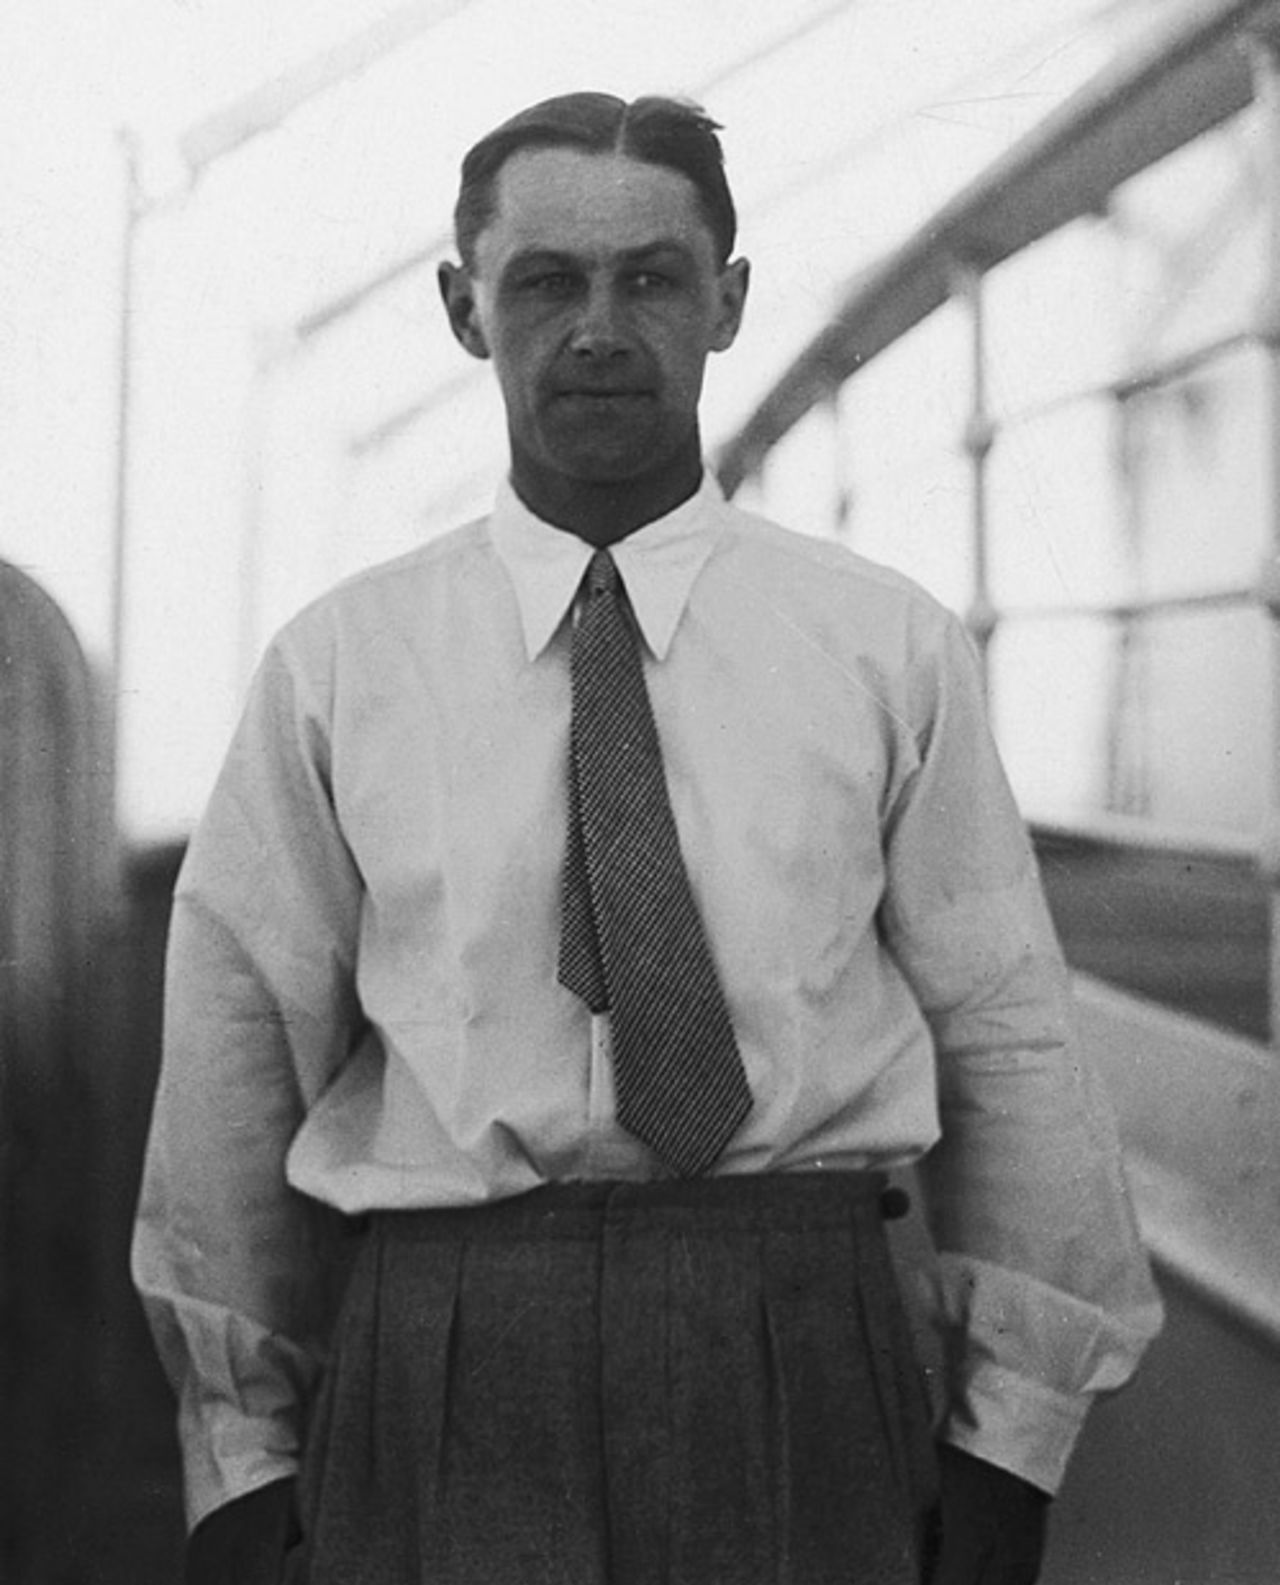 Gubby Allen on board the Orient liner Orontes, September 28, 1932